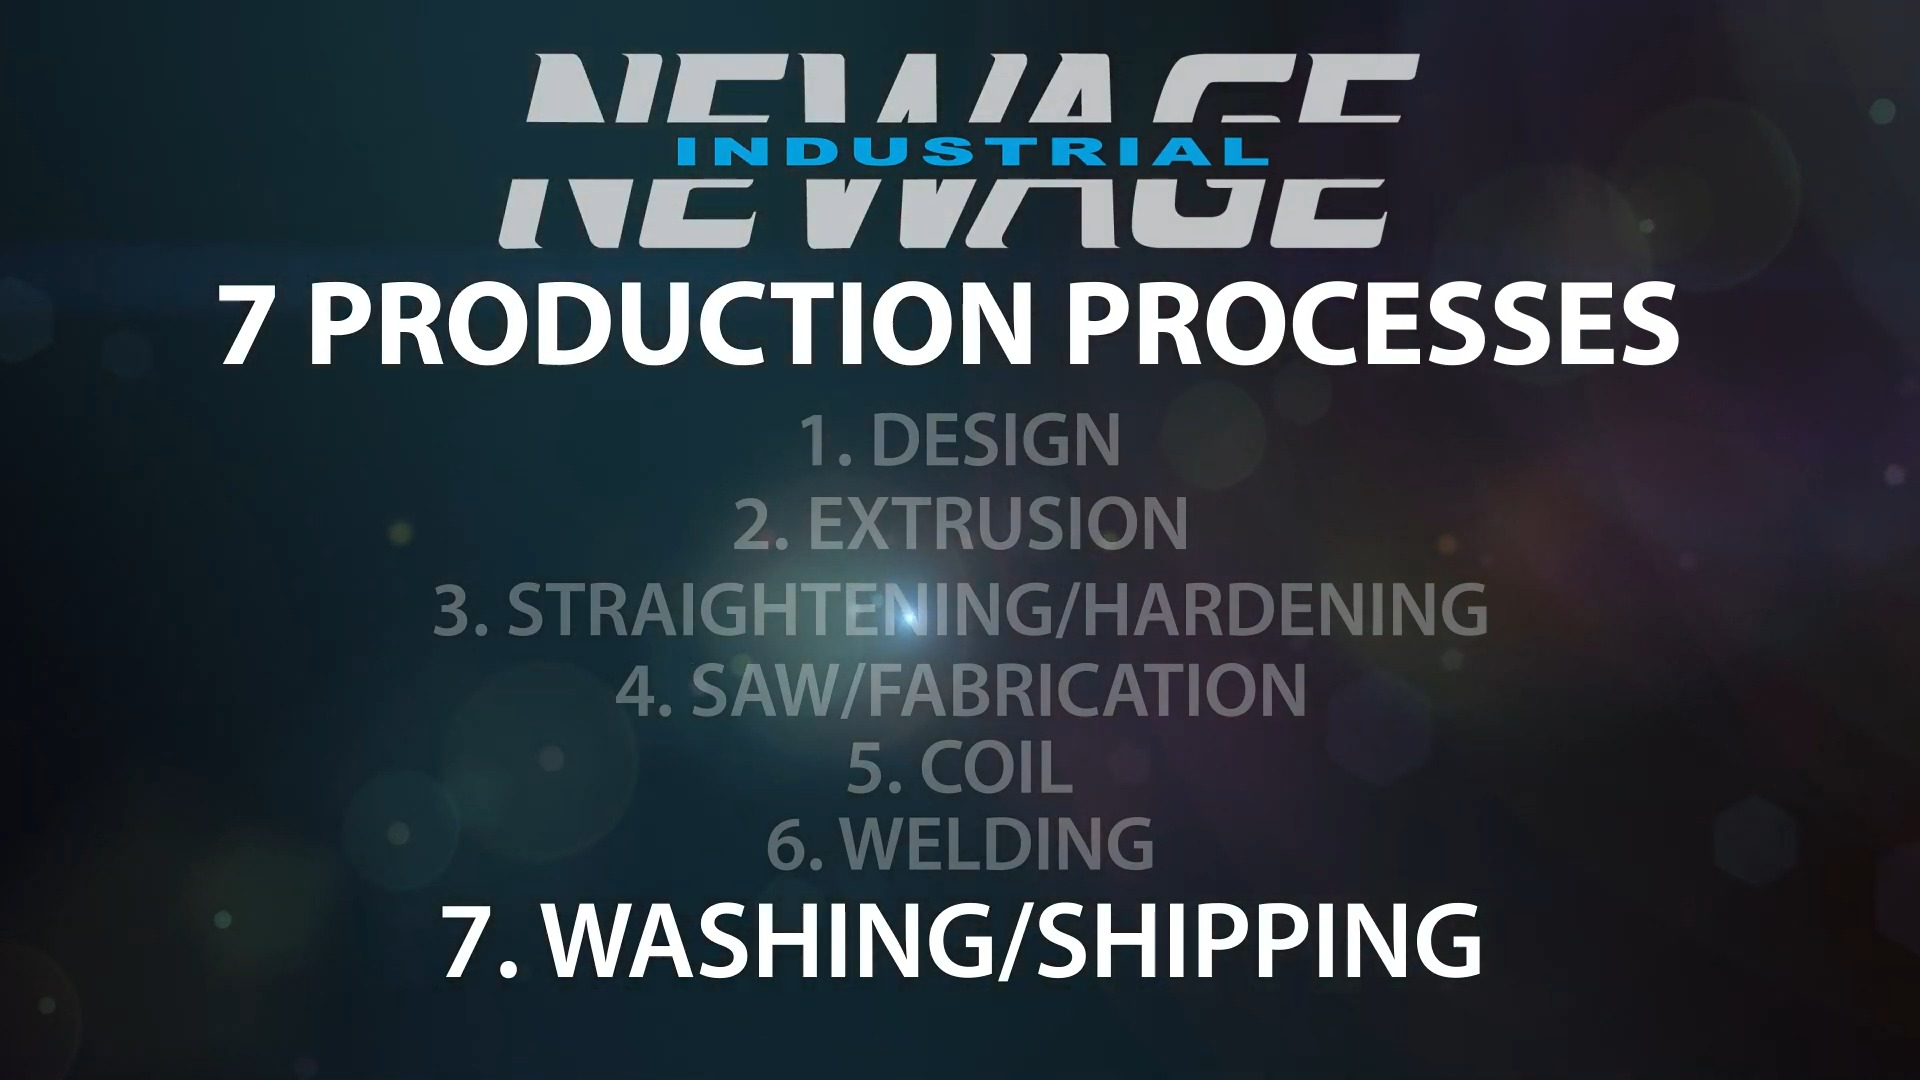 Process – Washing/Shipping